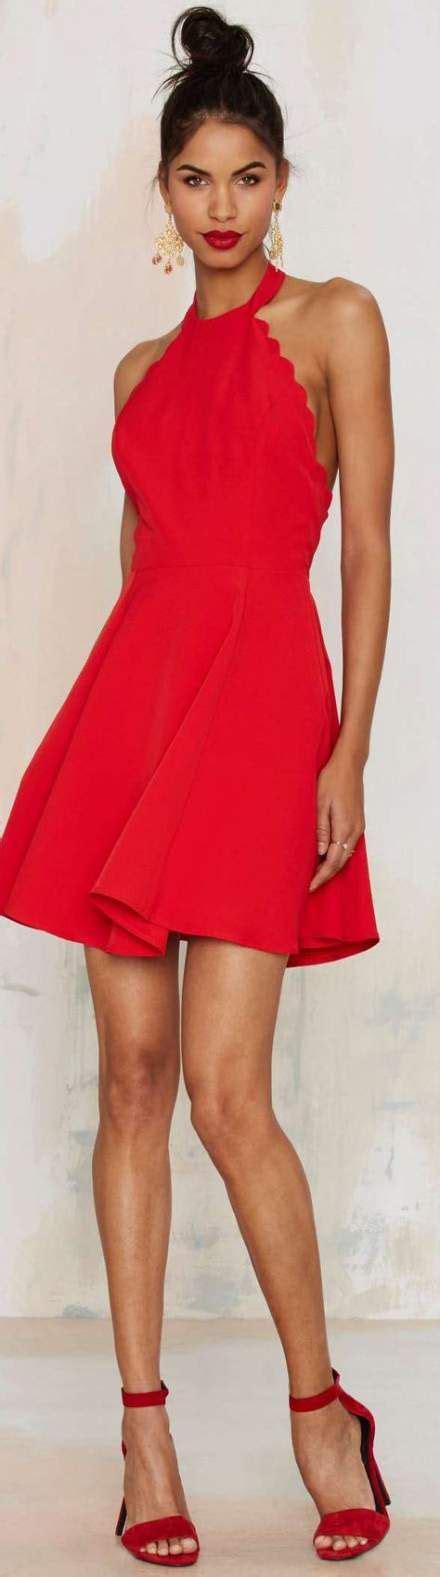 39 Super Ideas Dress Red Outfit Night Fashion Ideas Dress Fashion